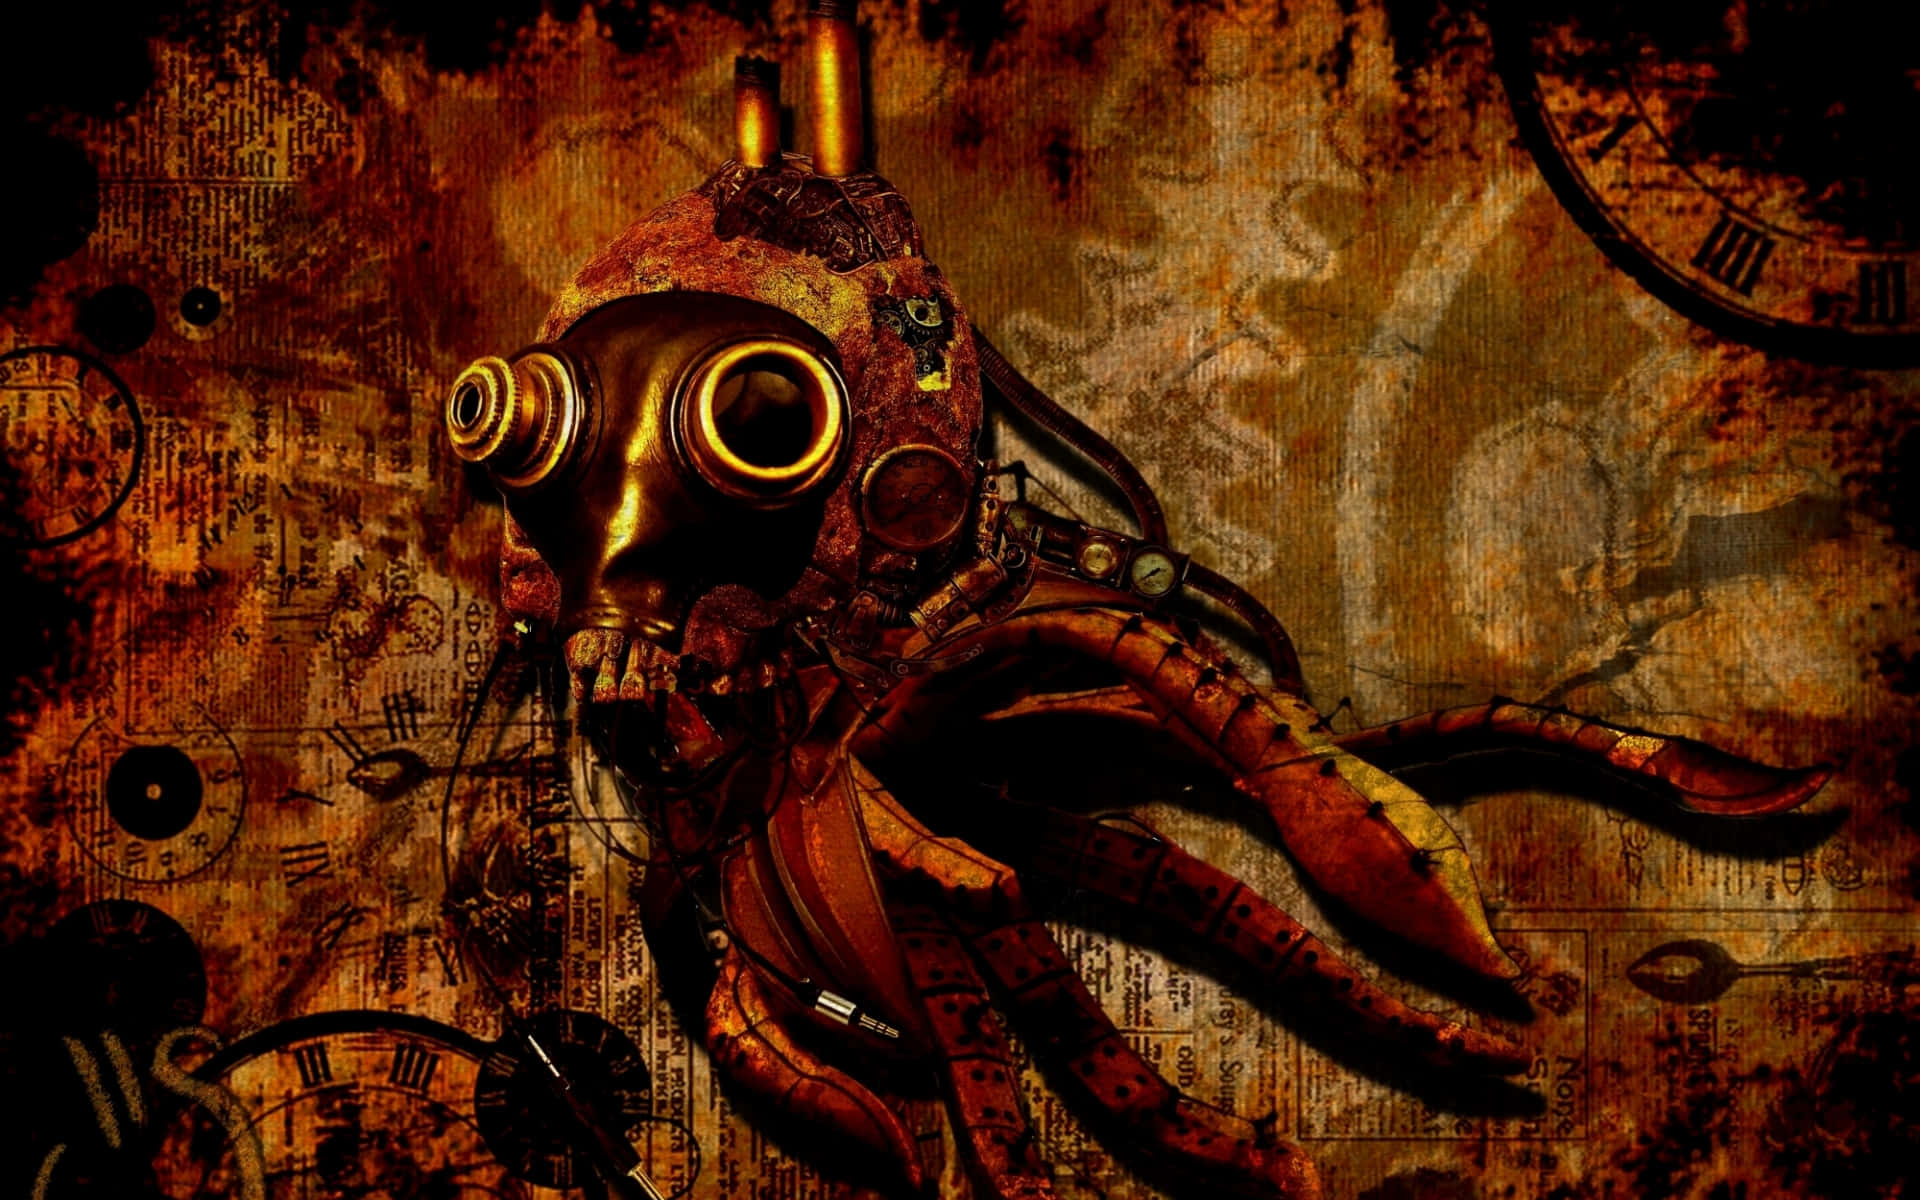 Mysterious Steampunk World in Darkness Wallpaper